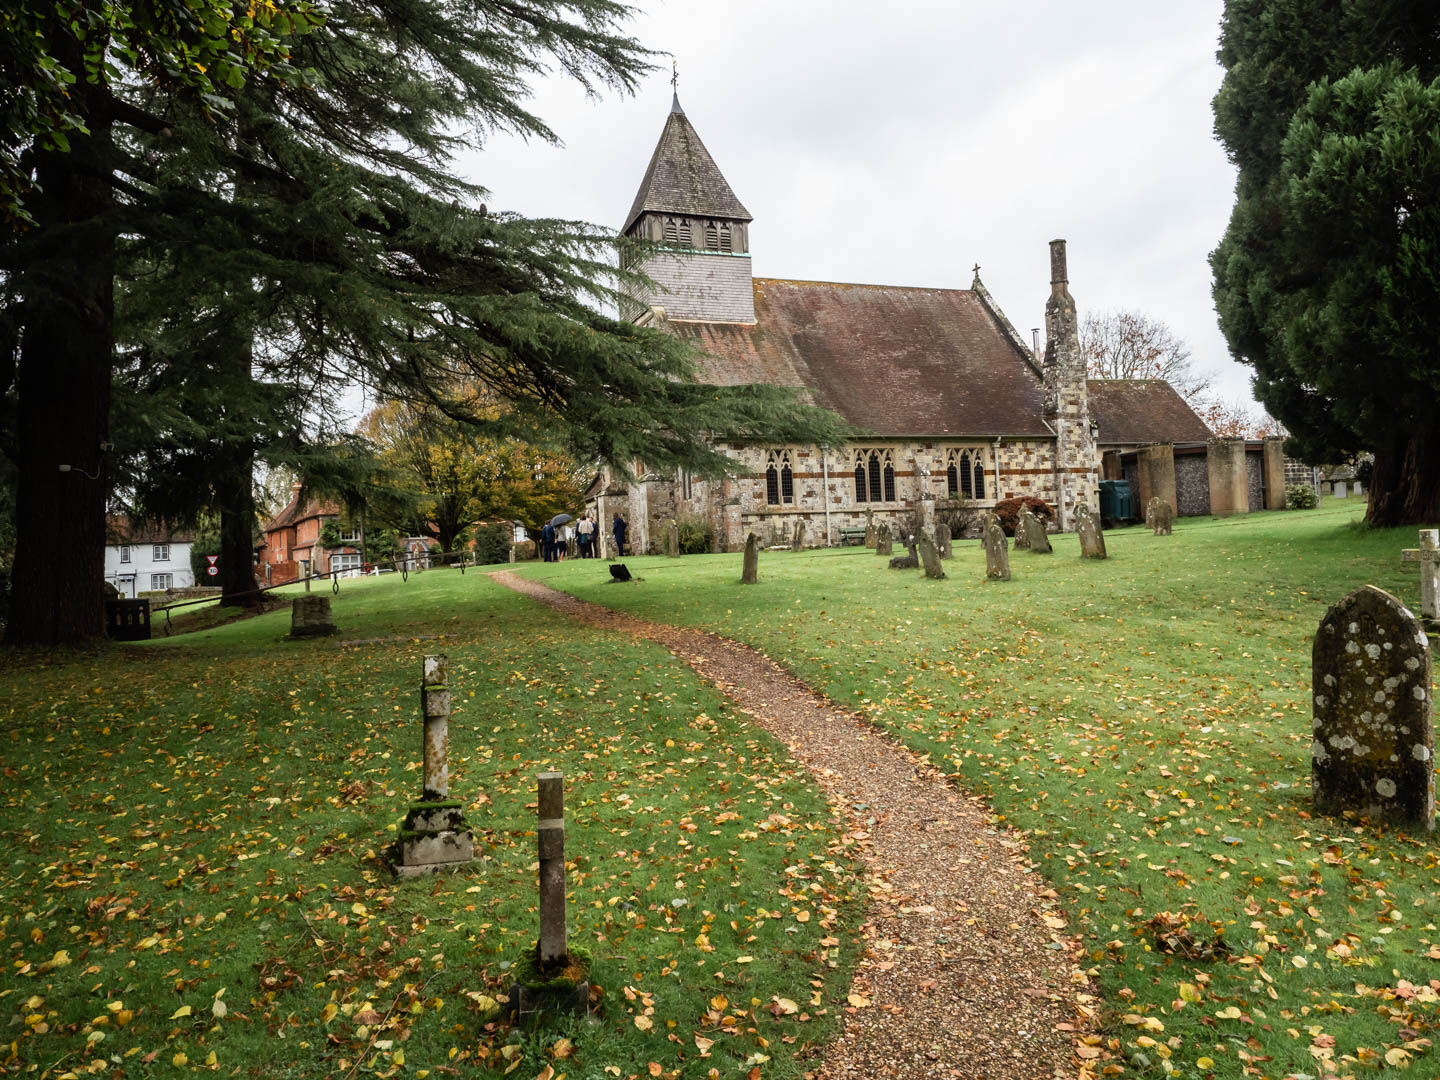 English country church and the path through its churchyard